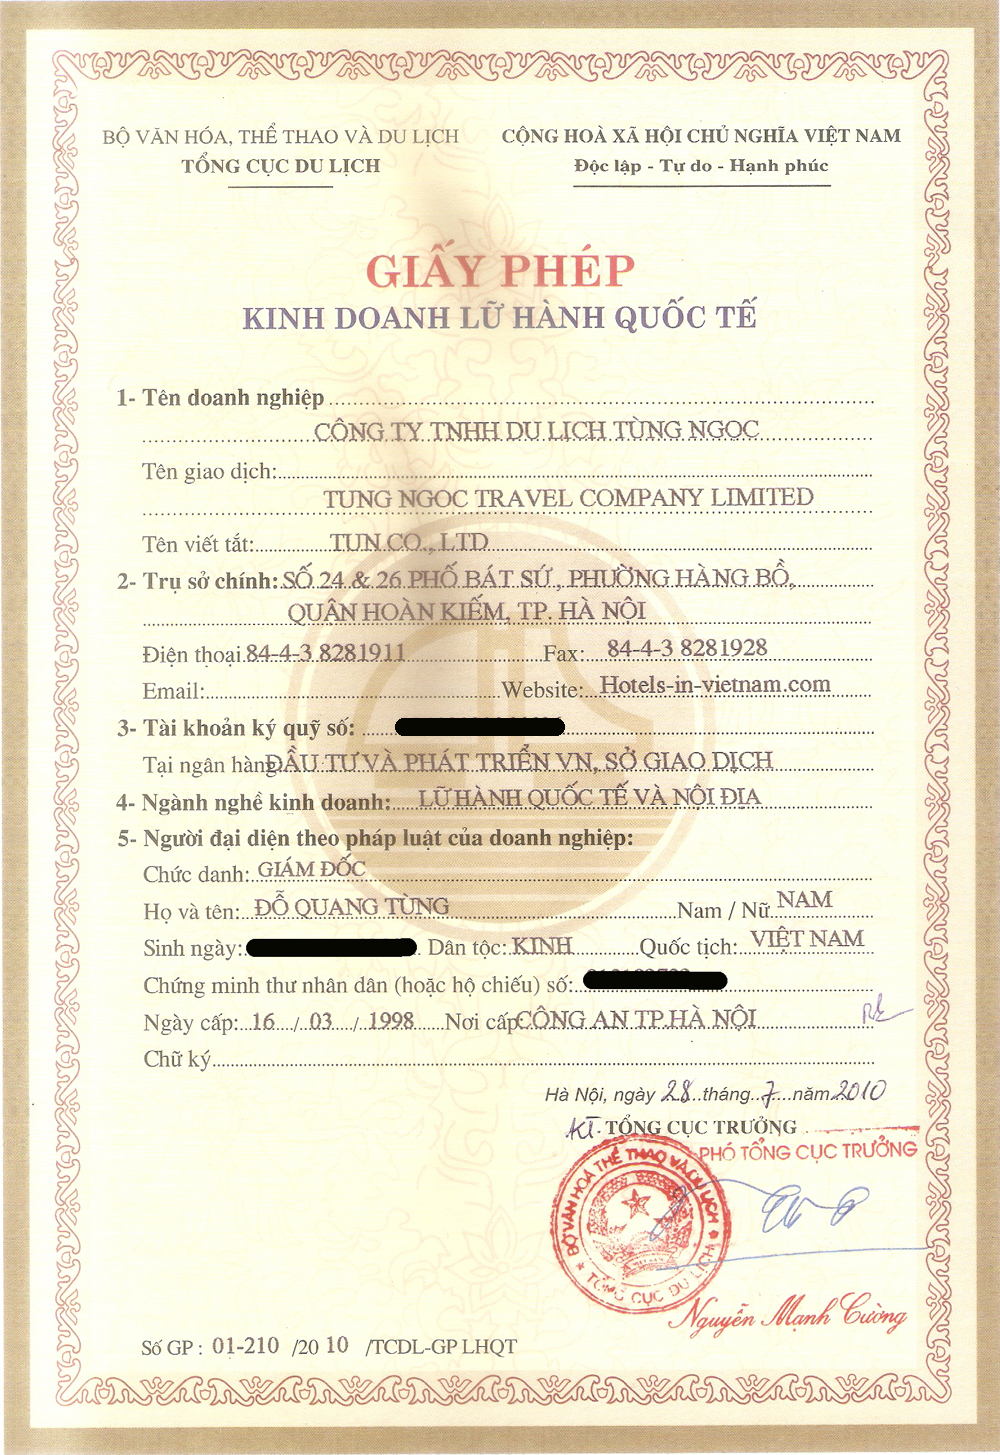 travel company license